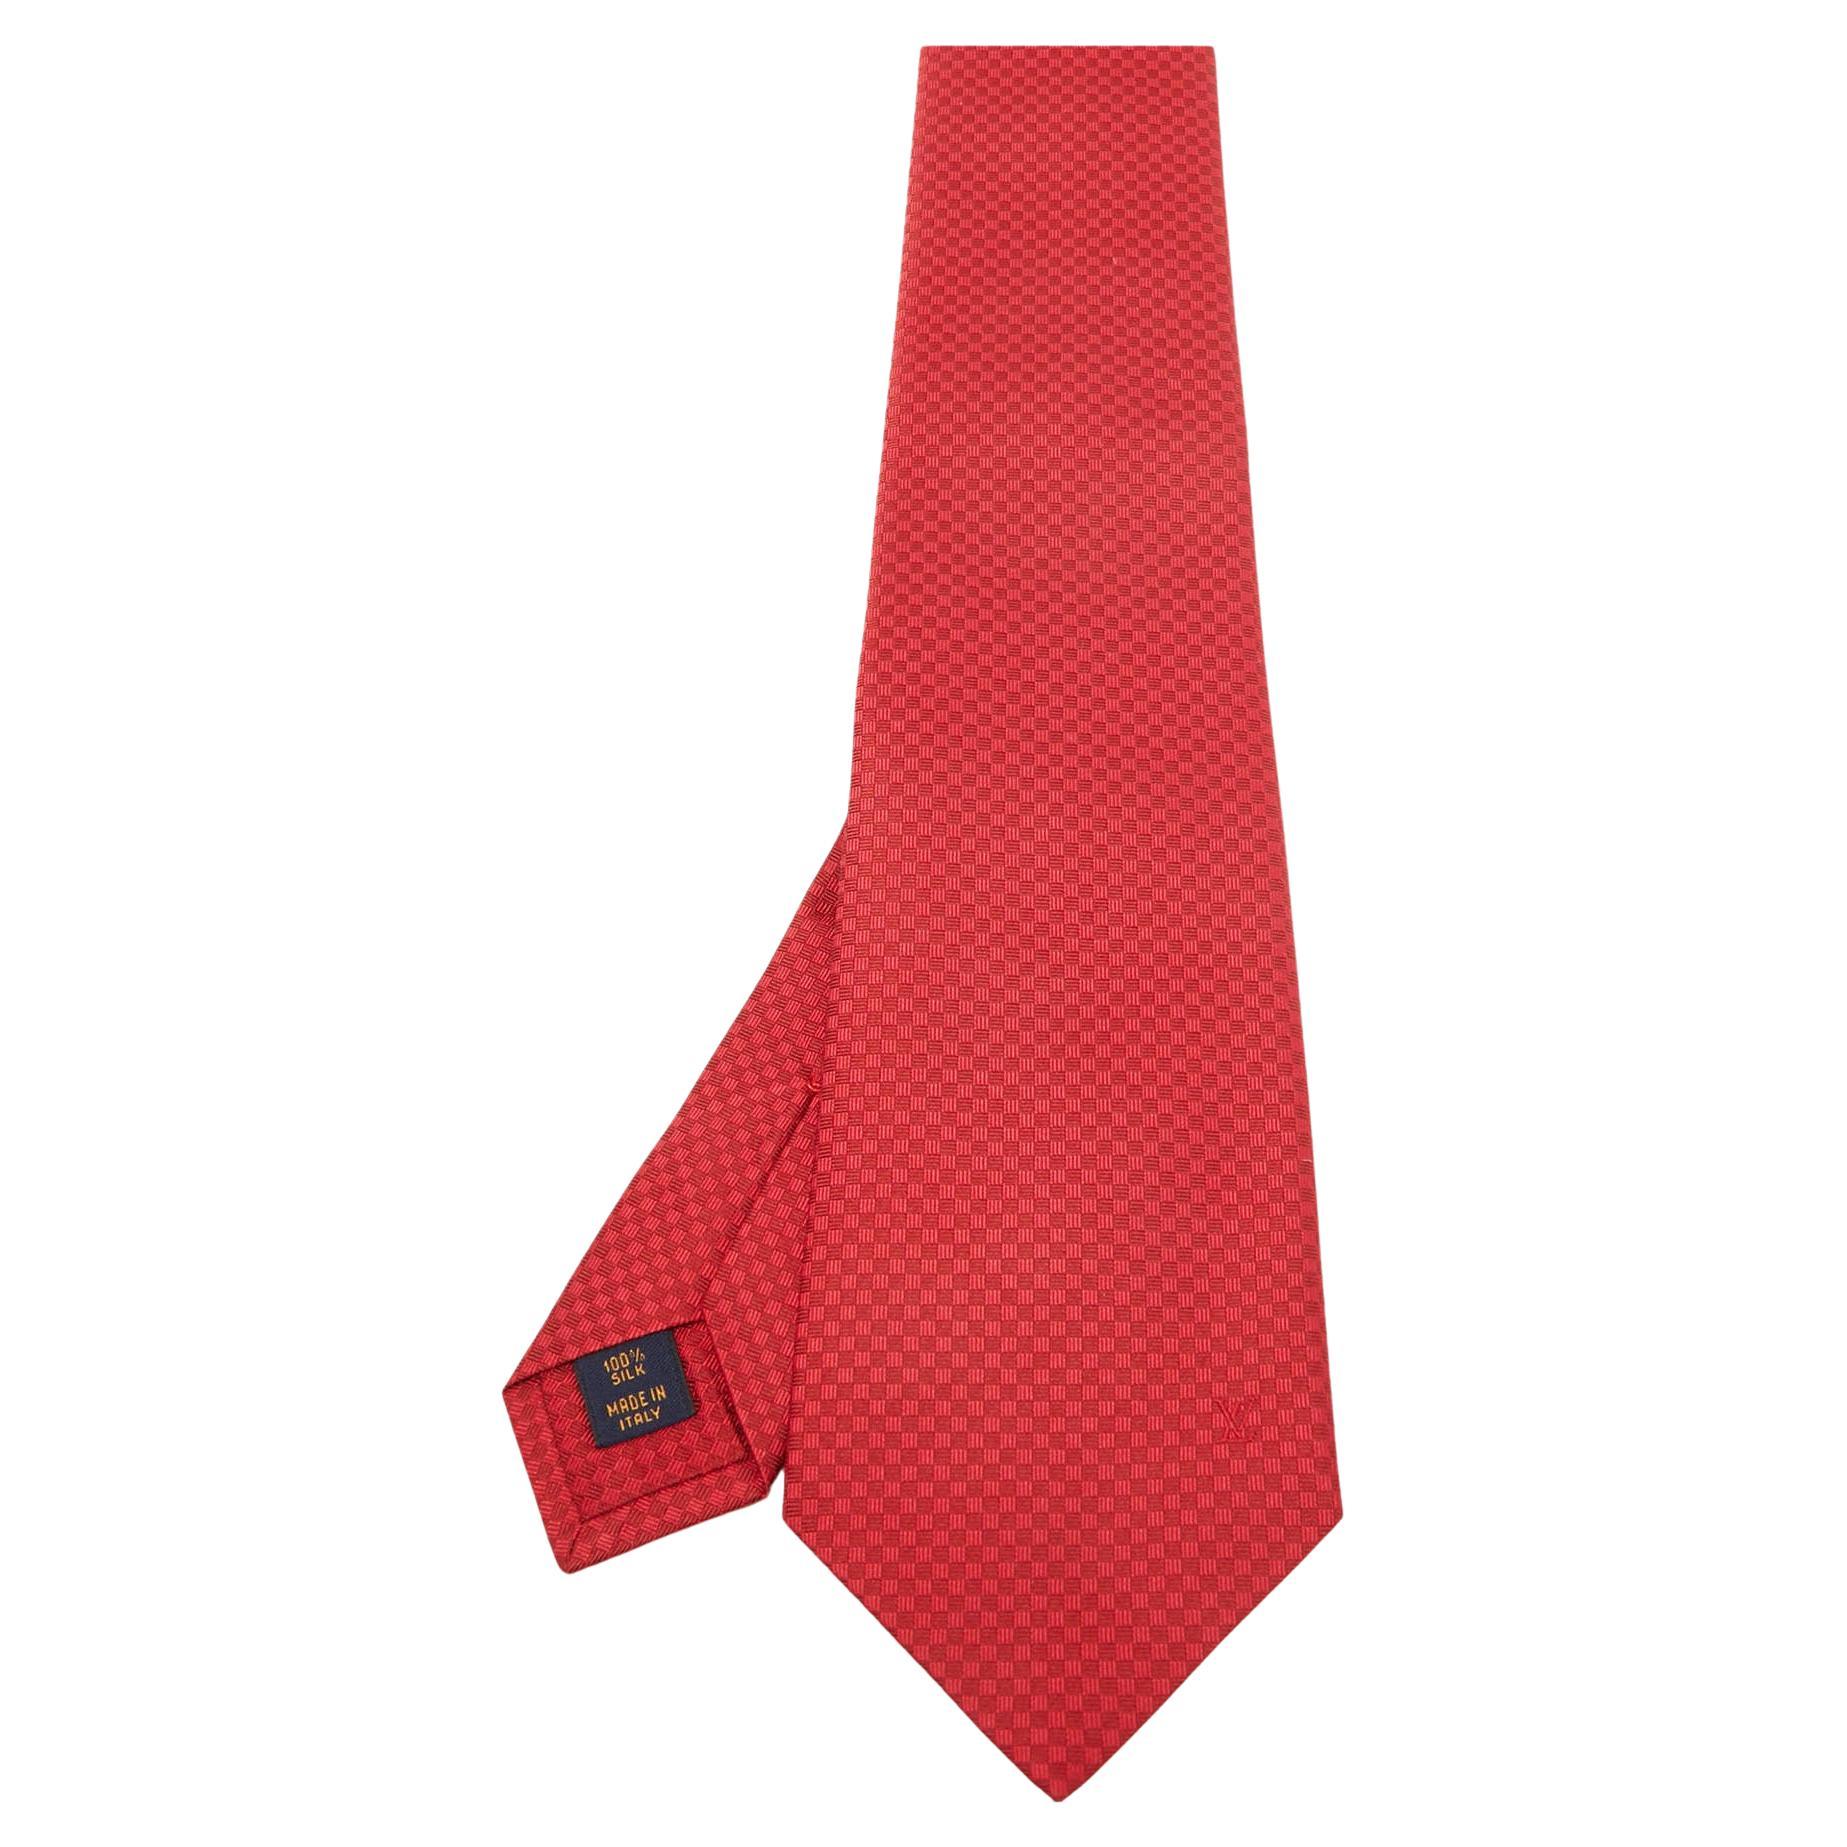  Louis Vuitton Red Micro Damier Silk Tie